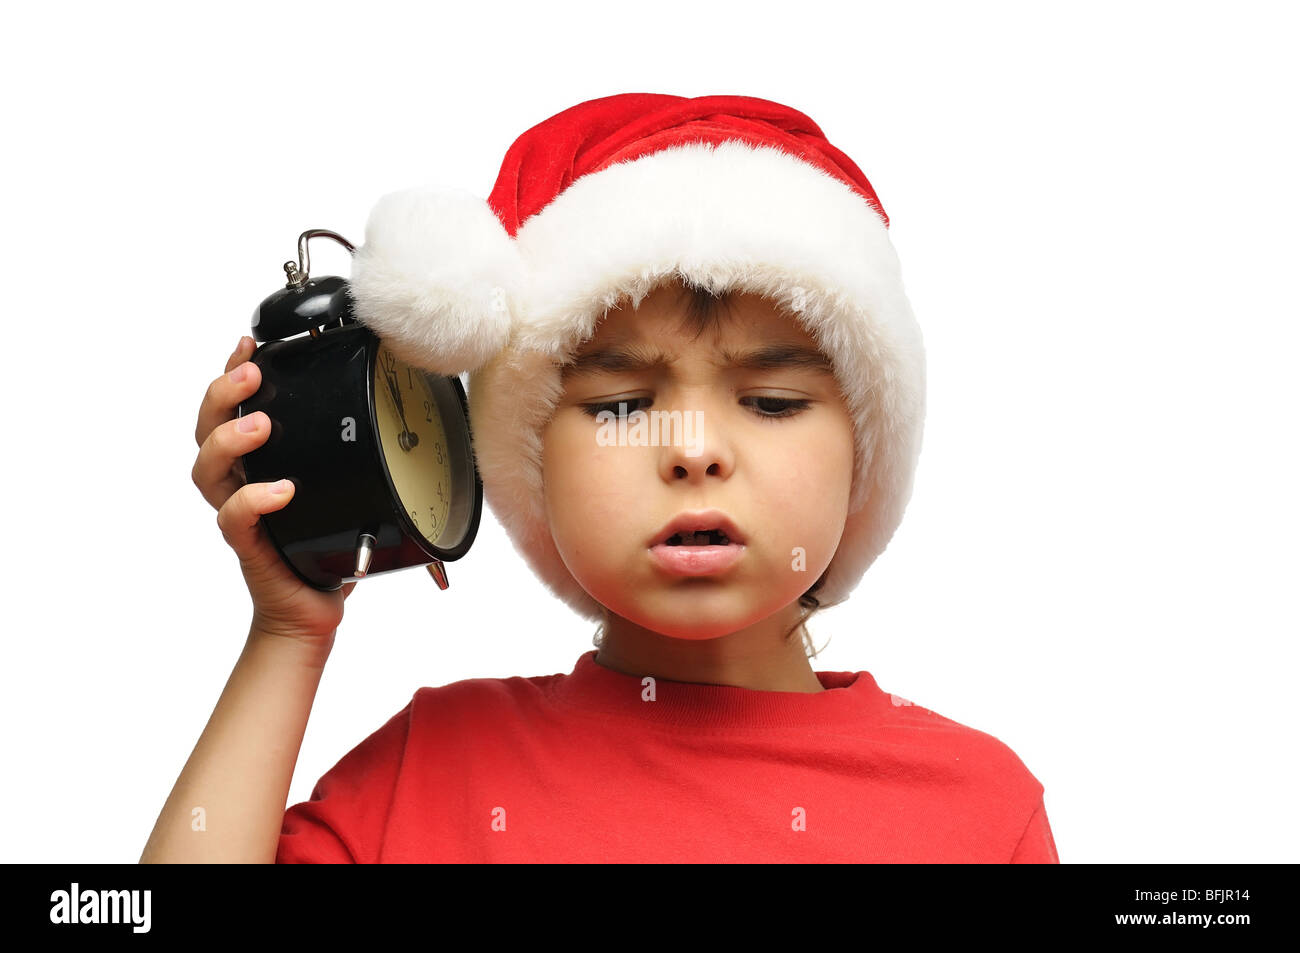 Santa kid holding an alarm clock Stock Photo